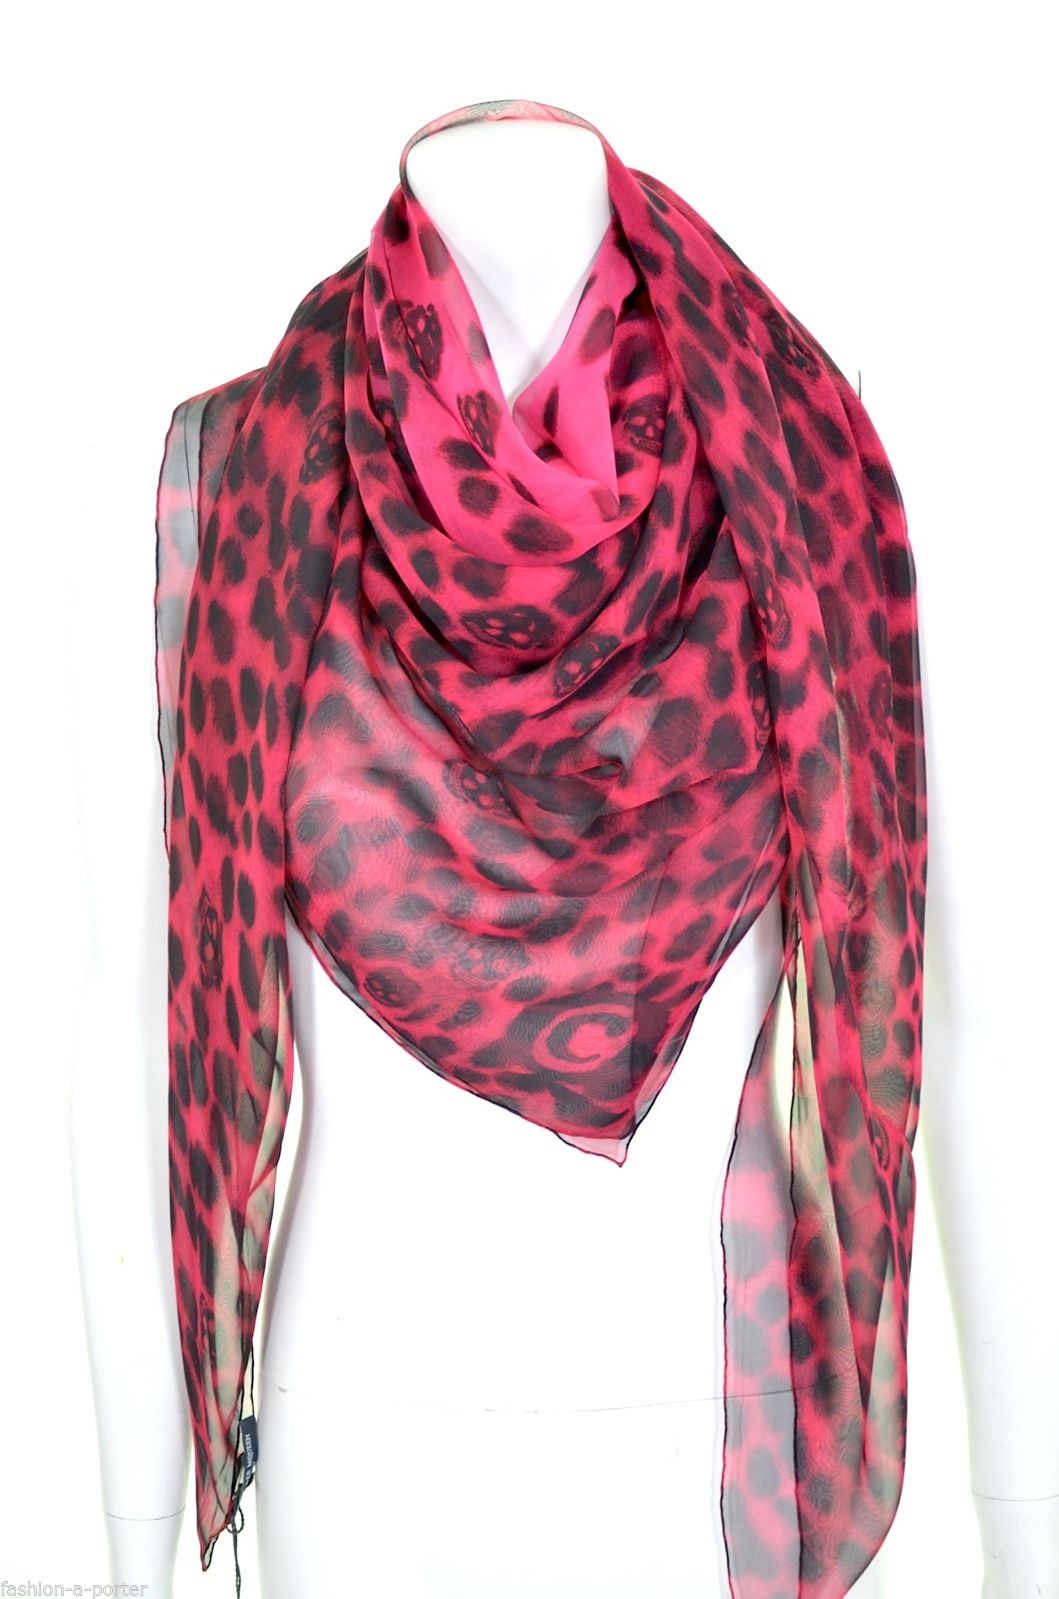 alexander mcqueen leopard scarf